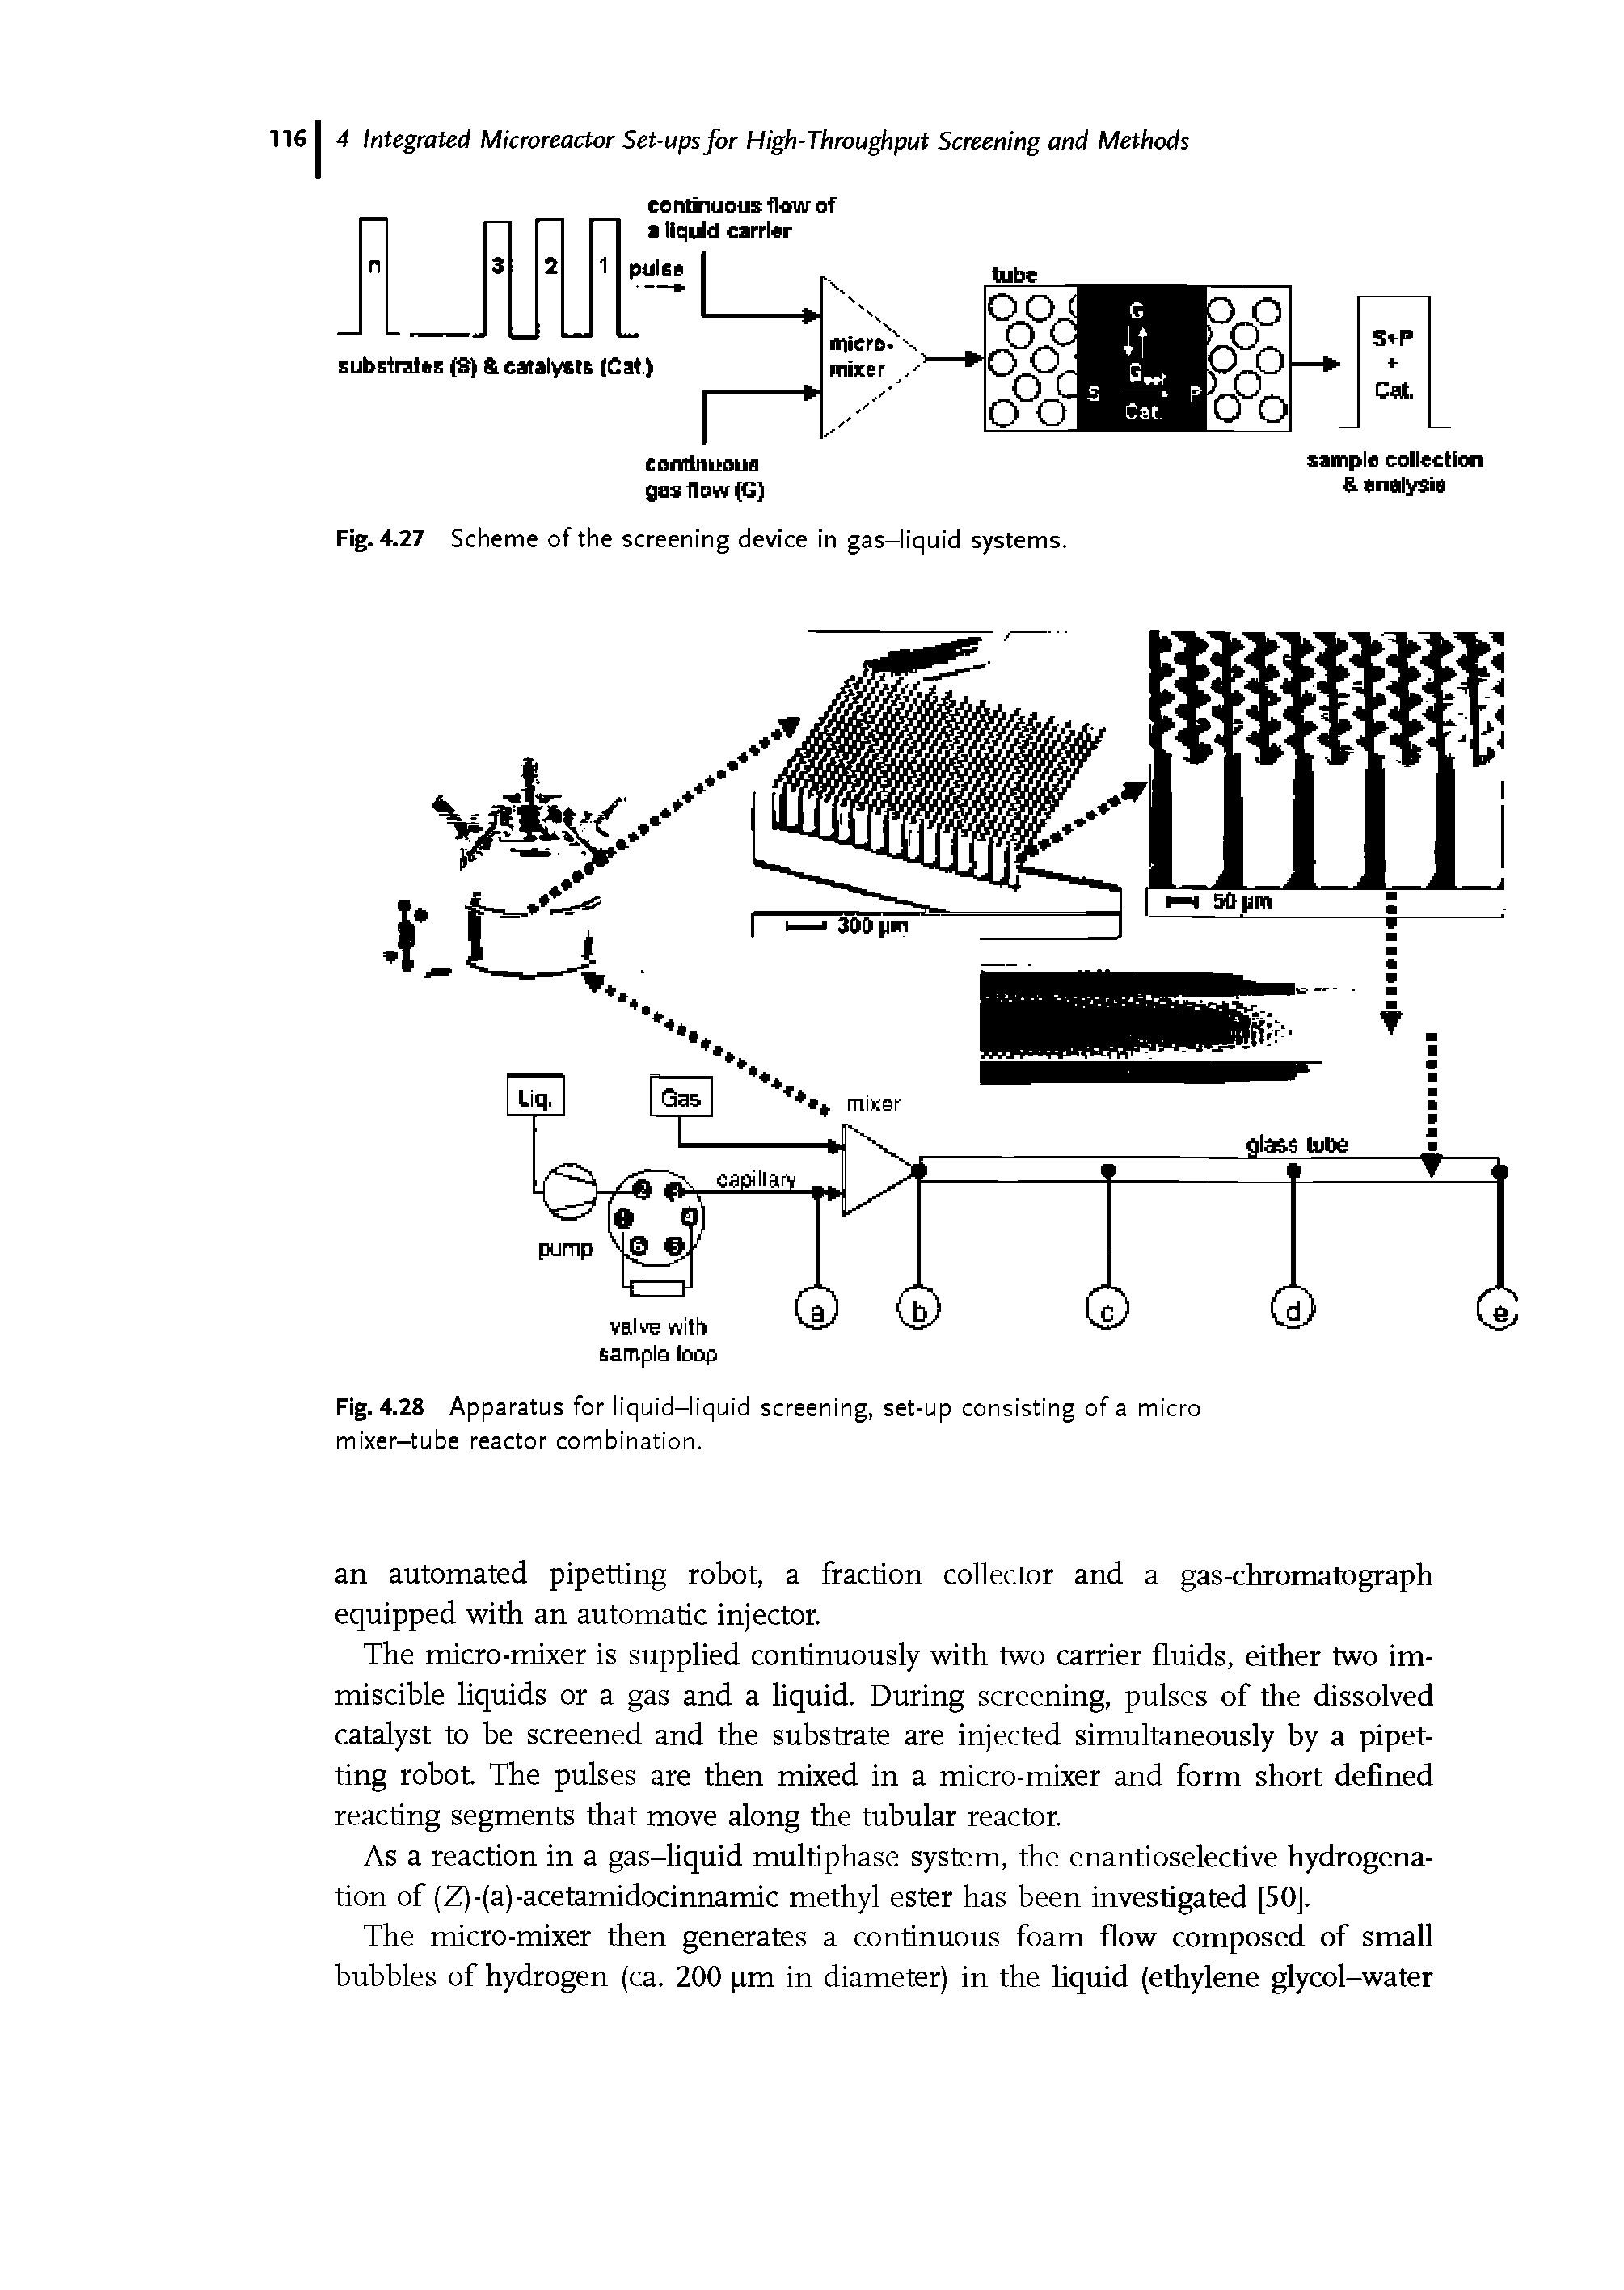 Fig. 4.28 Apparatus for liquid-liquid screening, set-up consisting of a micro mixer-tube reactor combination.